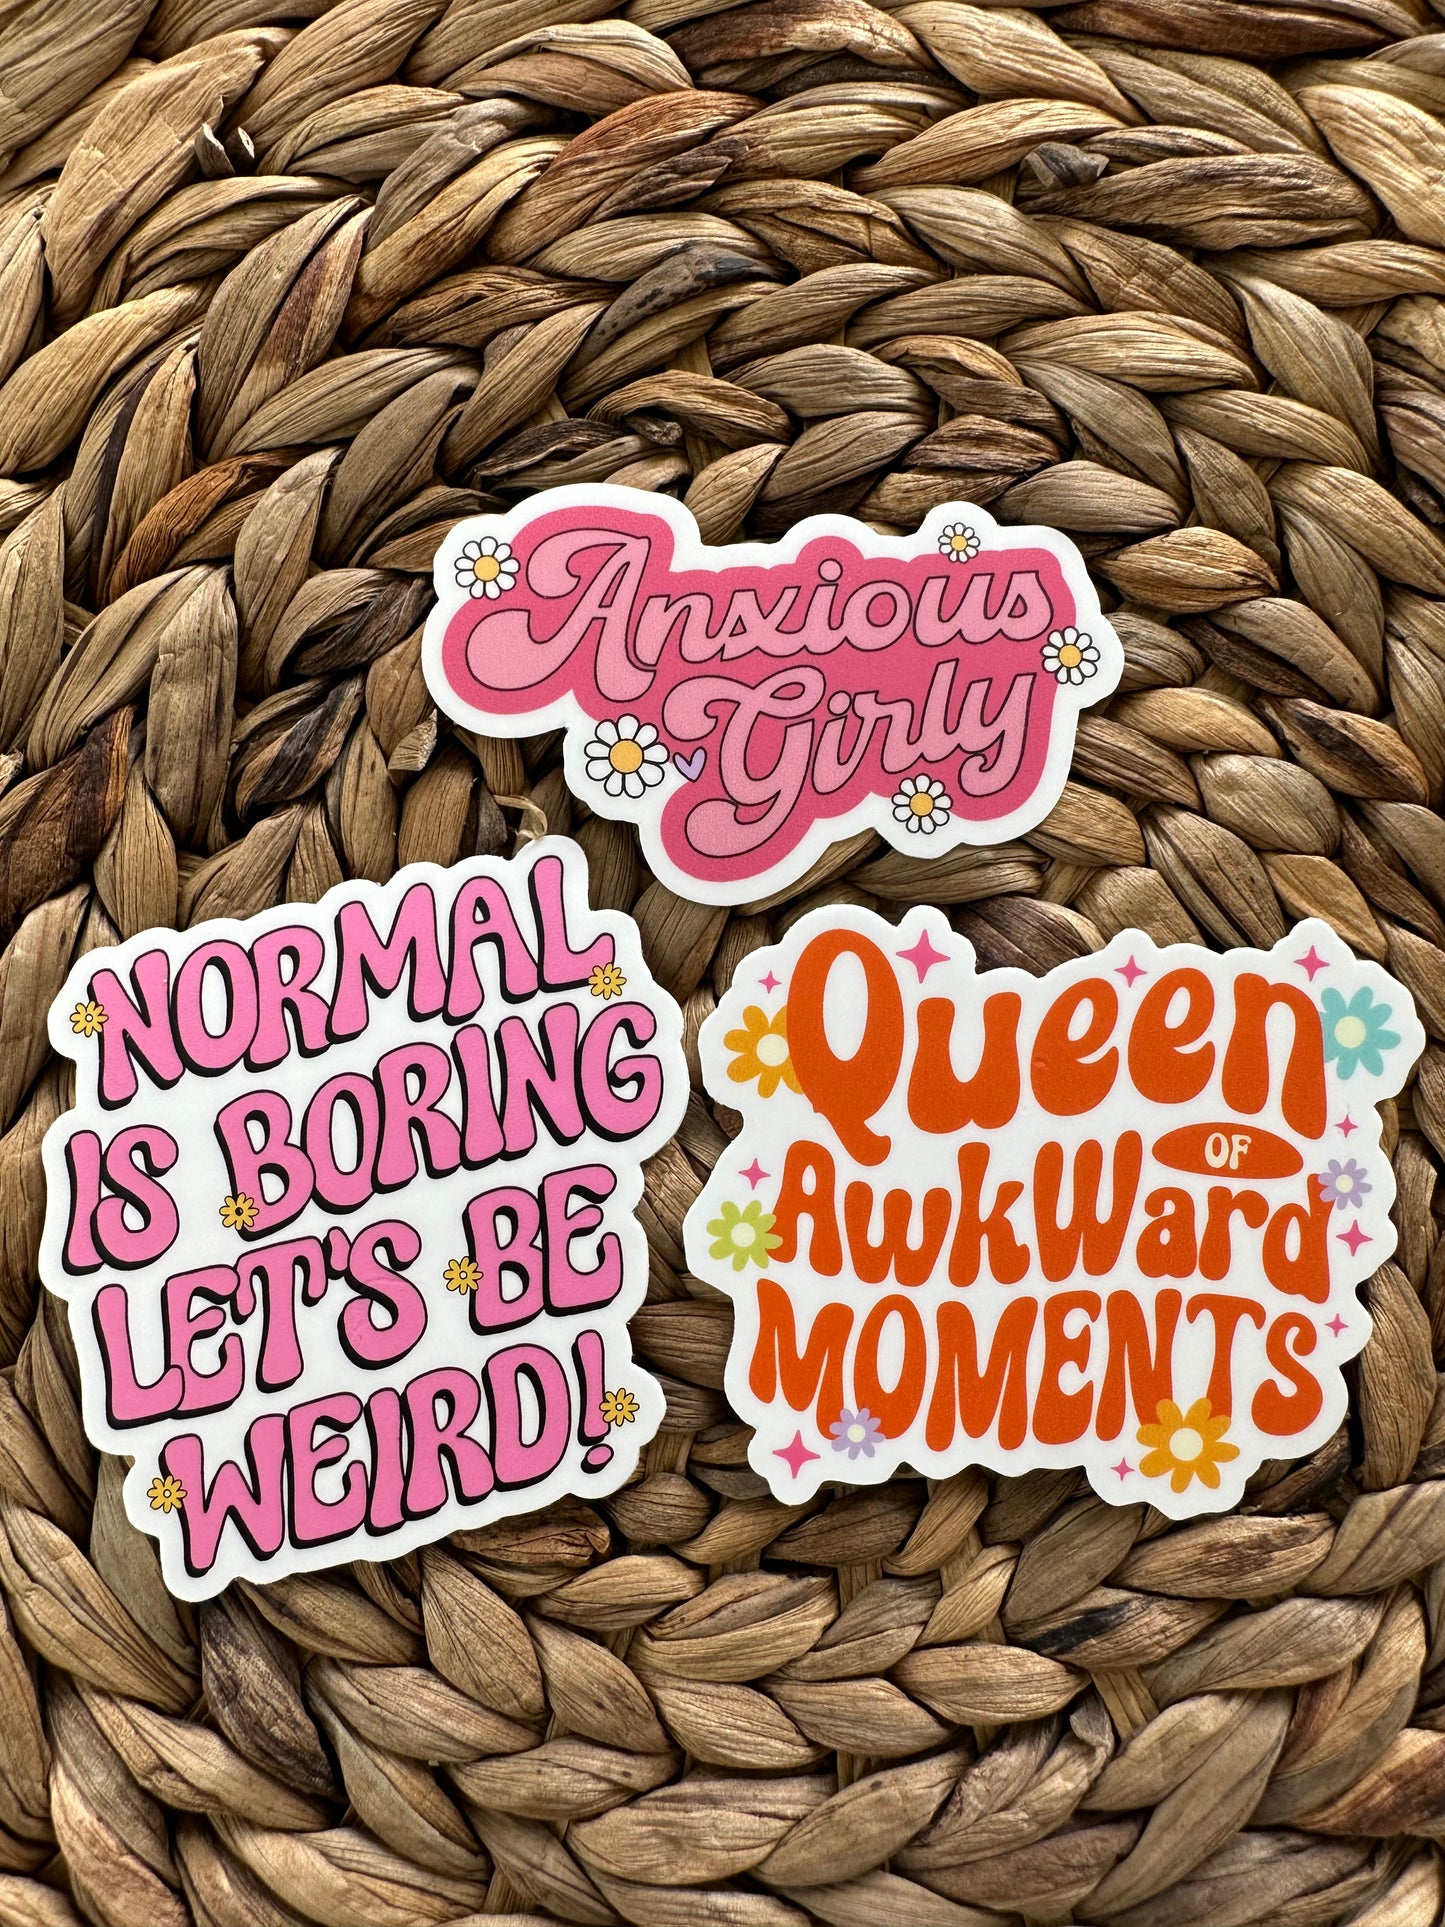 Queen of Awkward Moments Sticker, Awkward Sticker, Water Bottle Decal, Matte Sticker, Self Care Stickers, Anxious Sticker